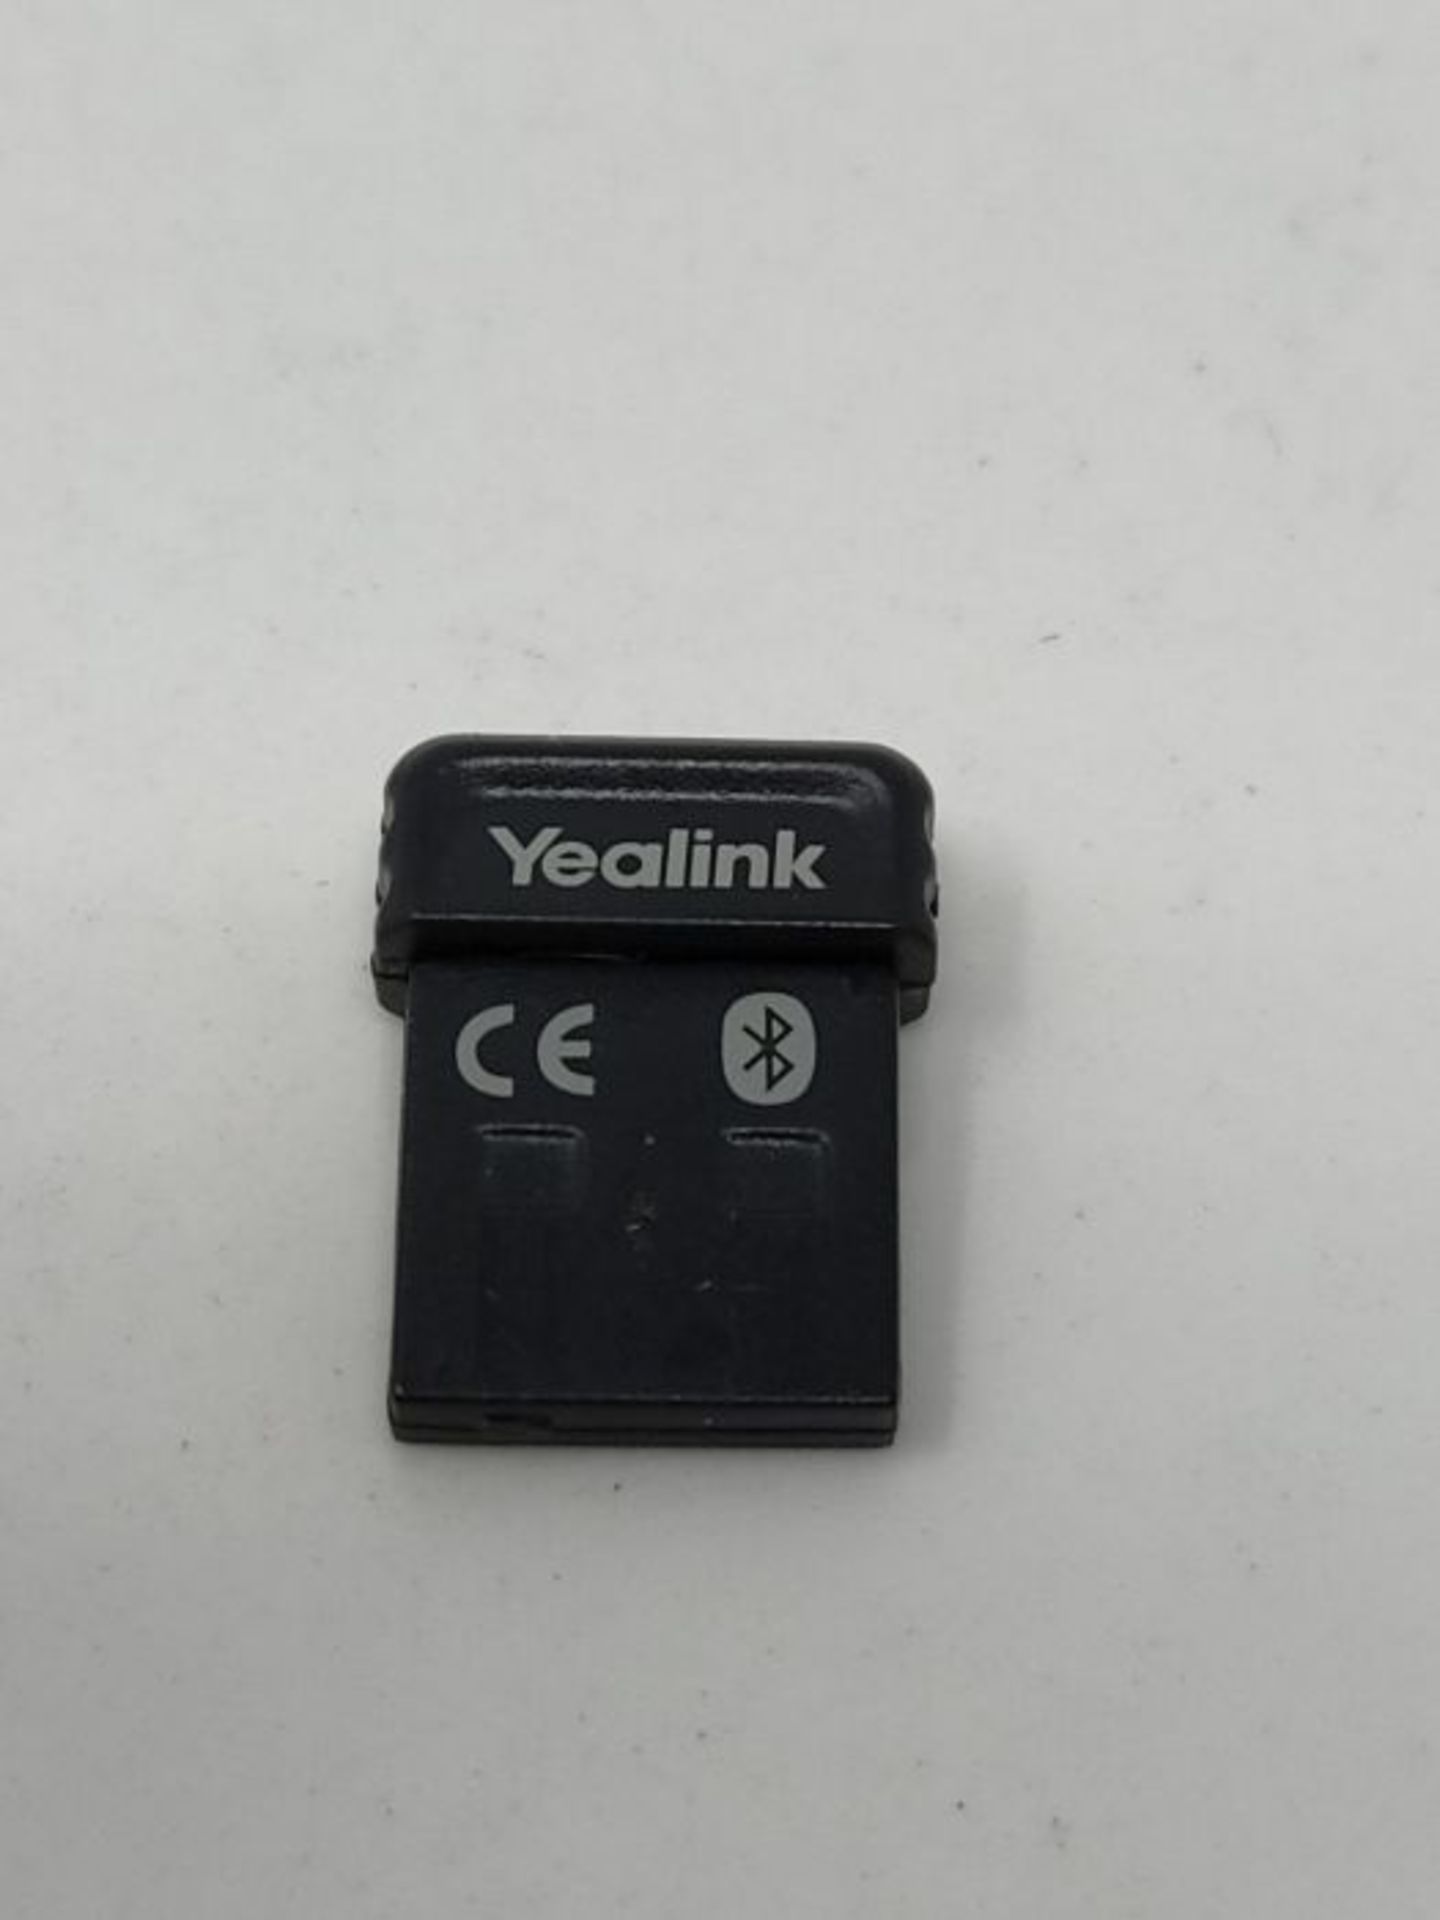 Yealink Bluetooth USB Dongle BT41 Bluetooth-Adapter - Image 3 of 3